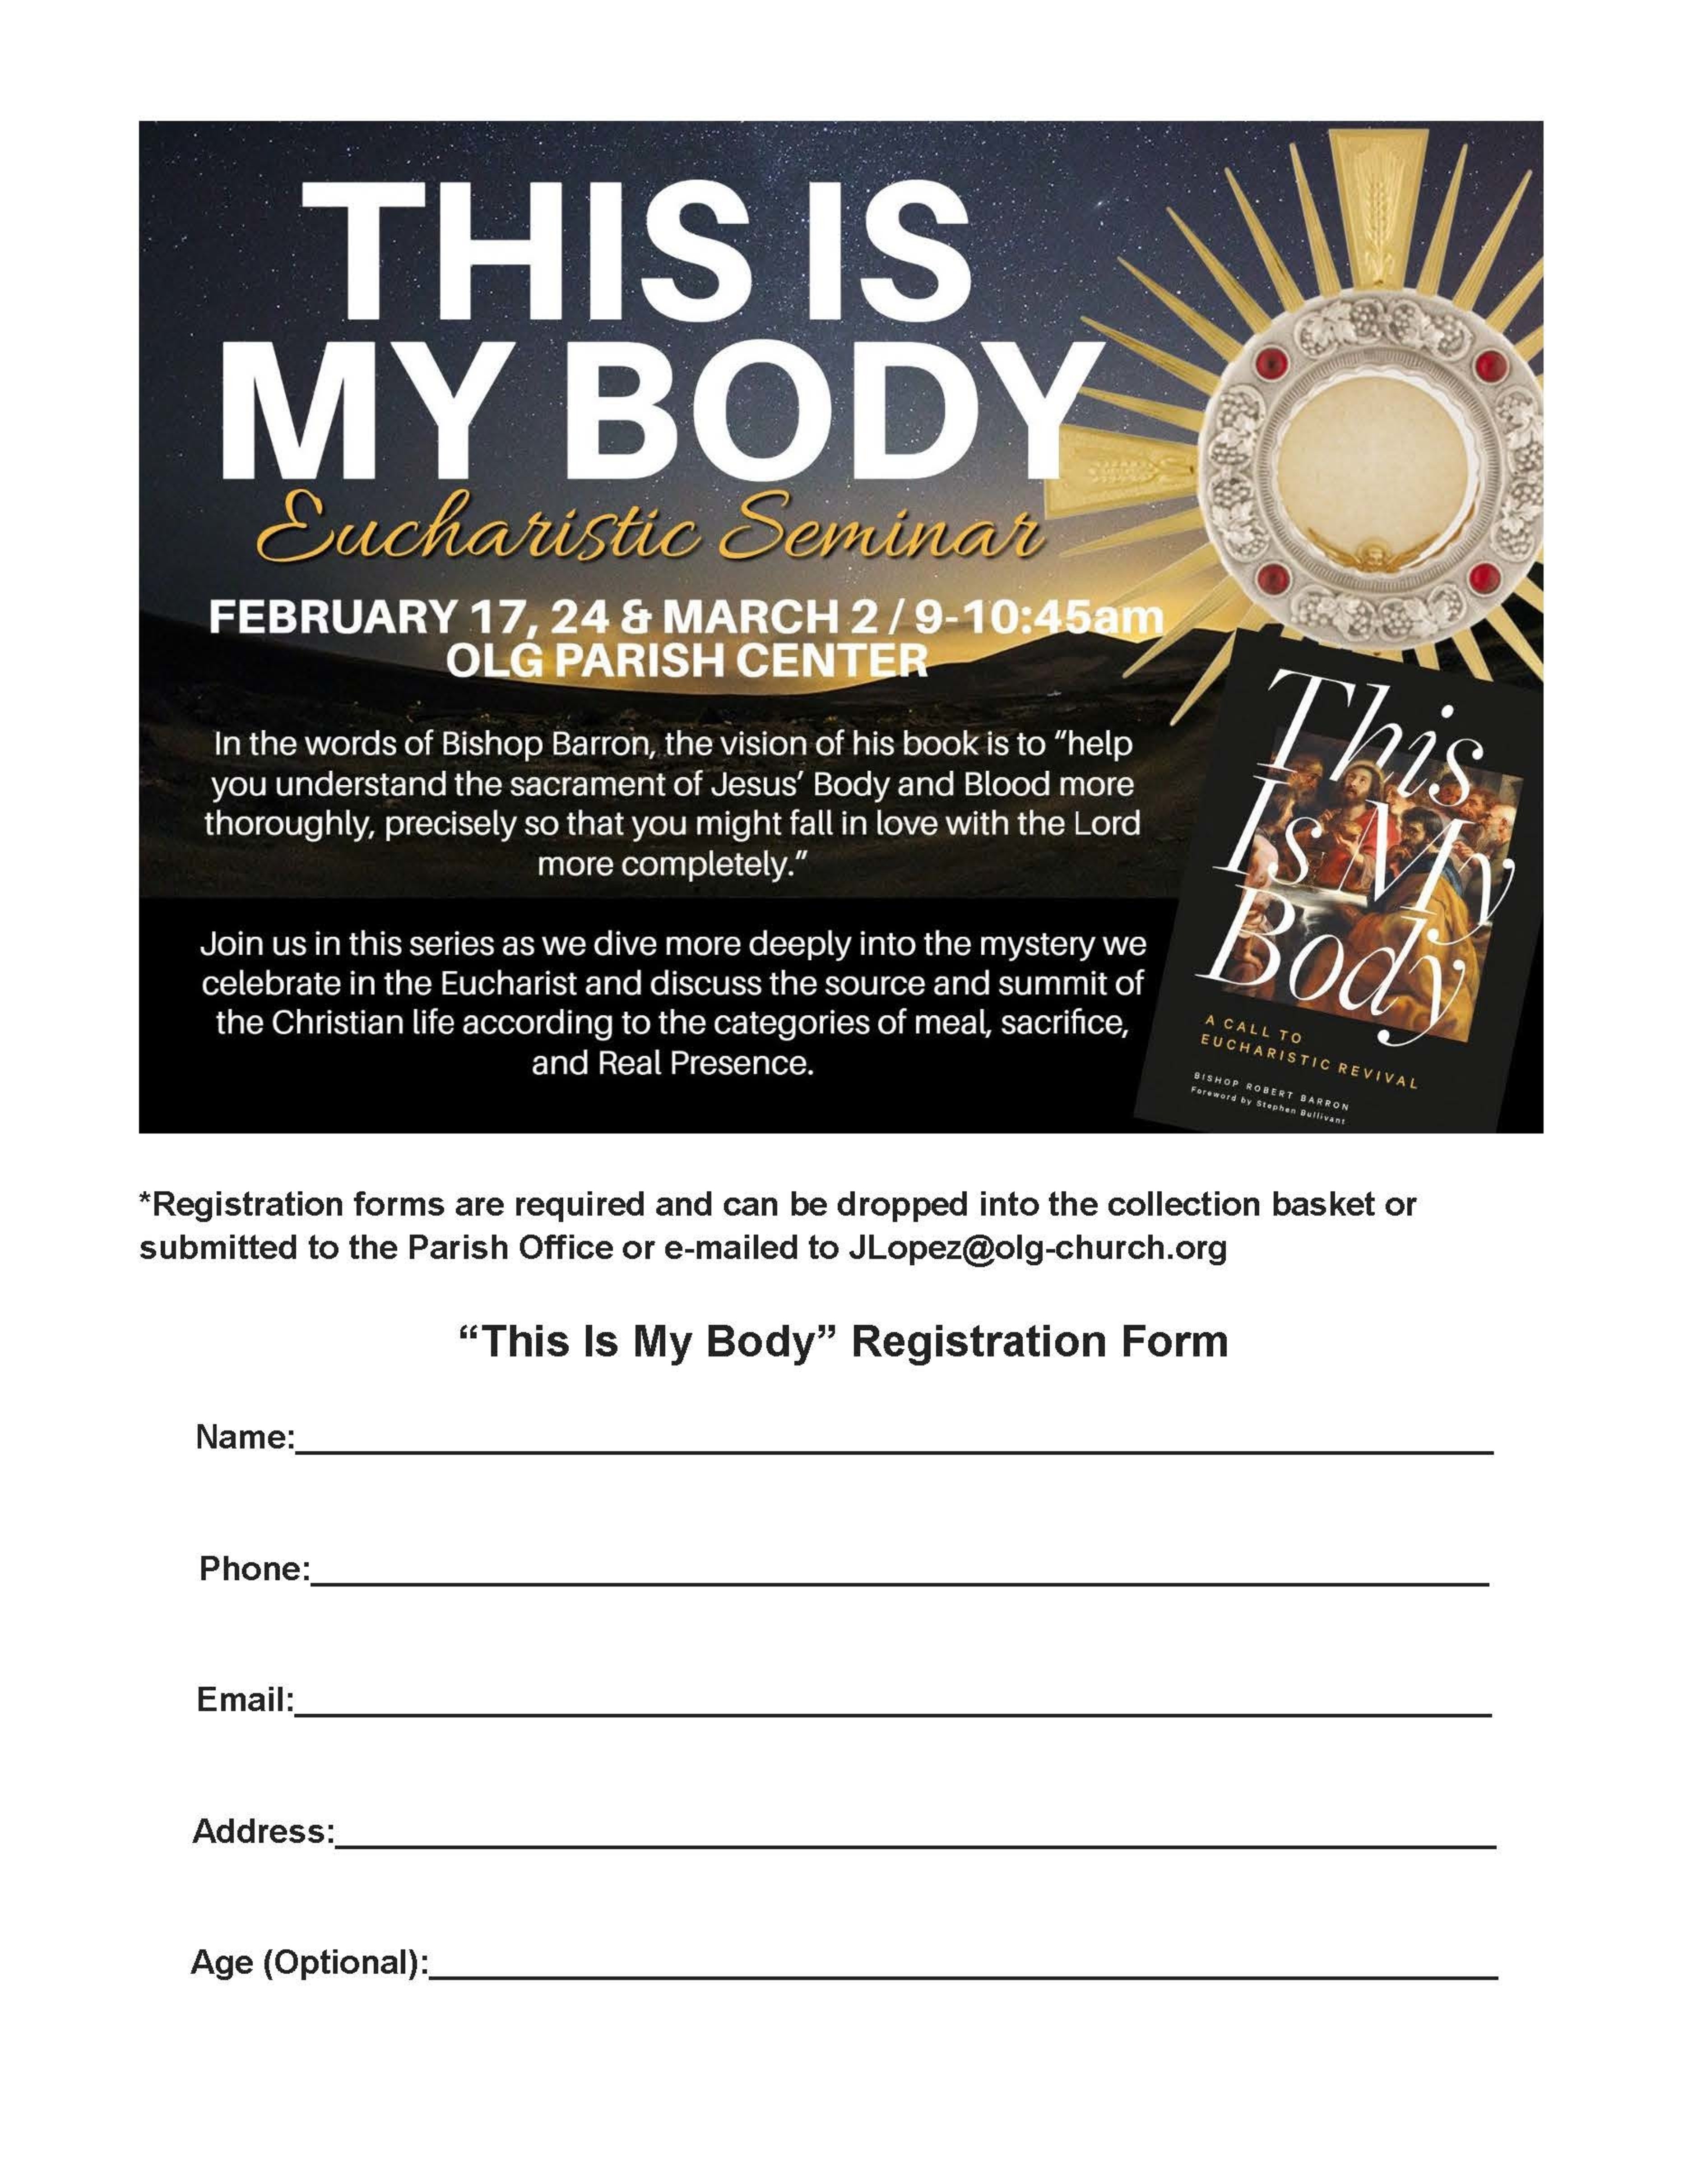 This Is My Body Eucharistic Seminar Registration Form